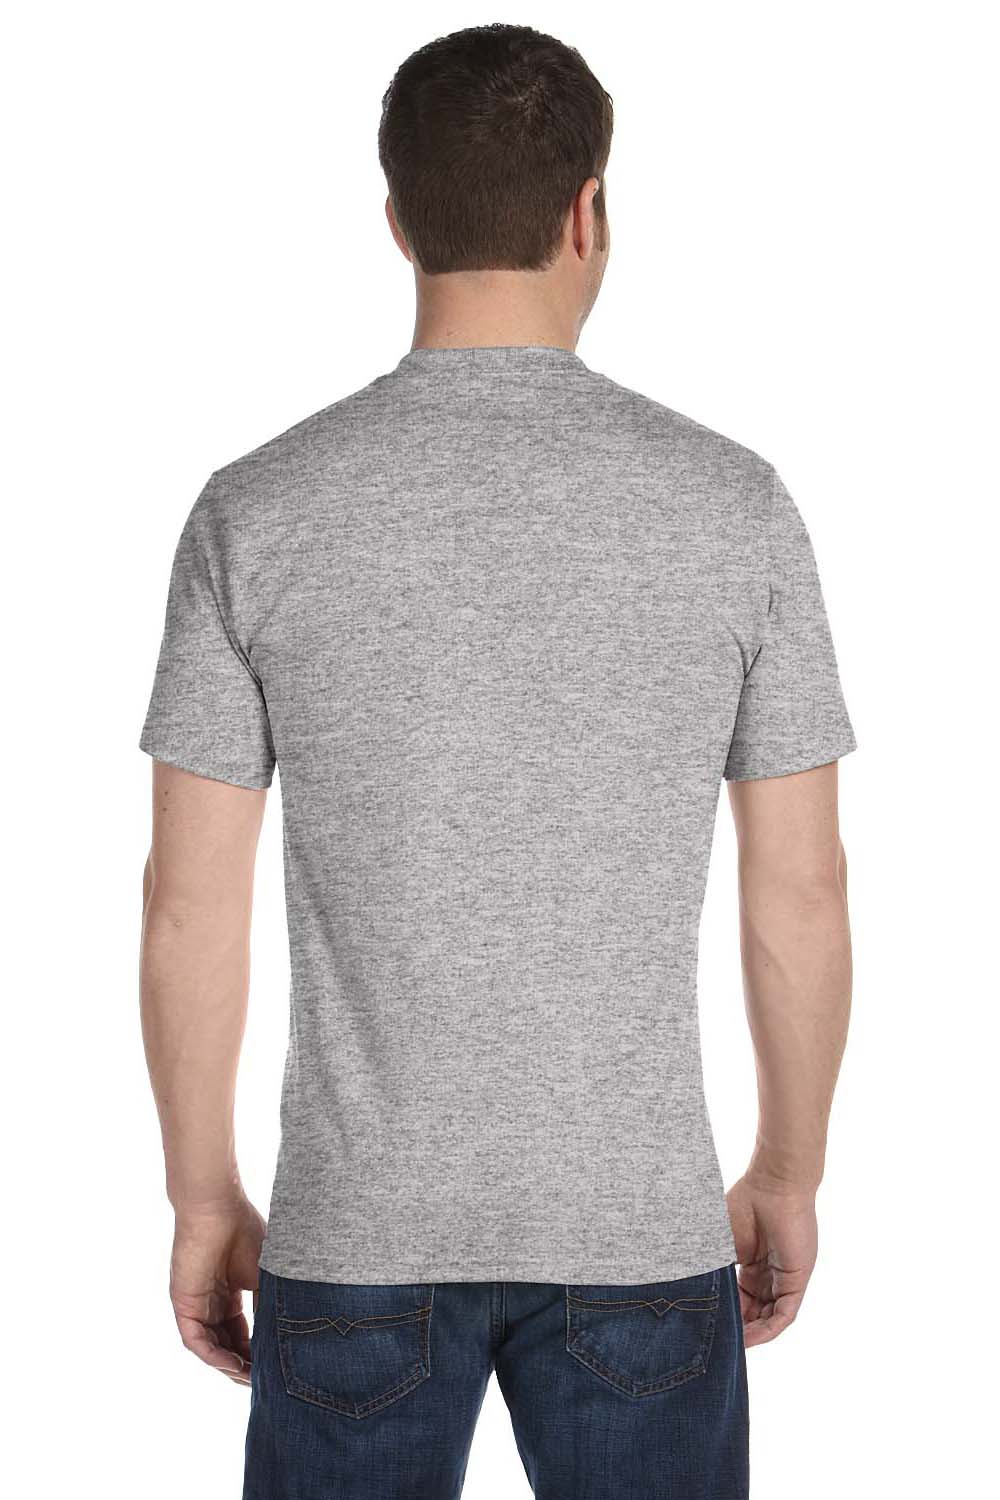 Hanes 5280 Mens ComfortSoft Short Sleeve Crewneck T-Shirt Light Steel Grey Back